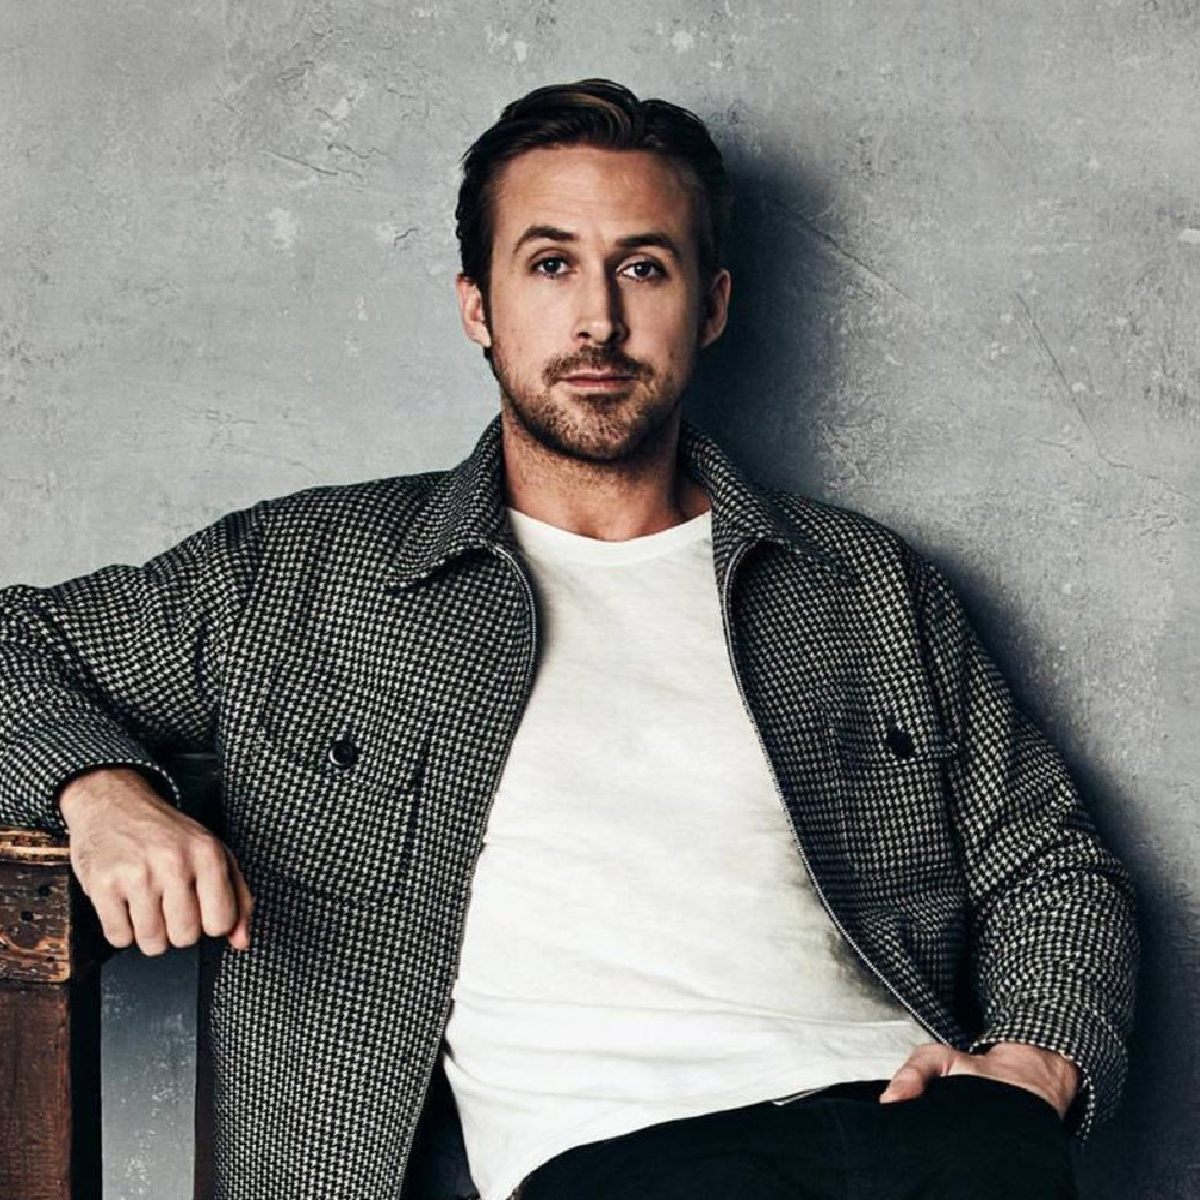 Filmstar Ryan Gosling